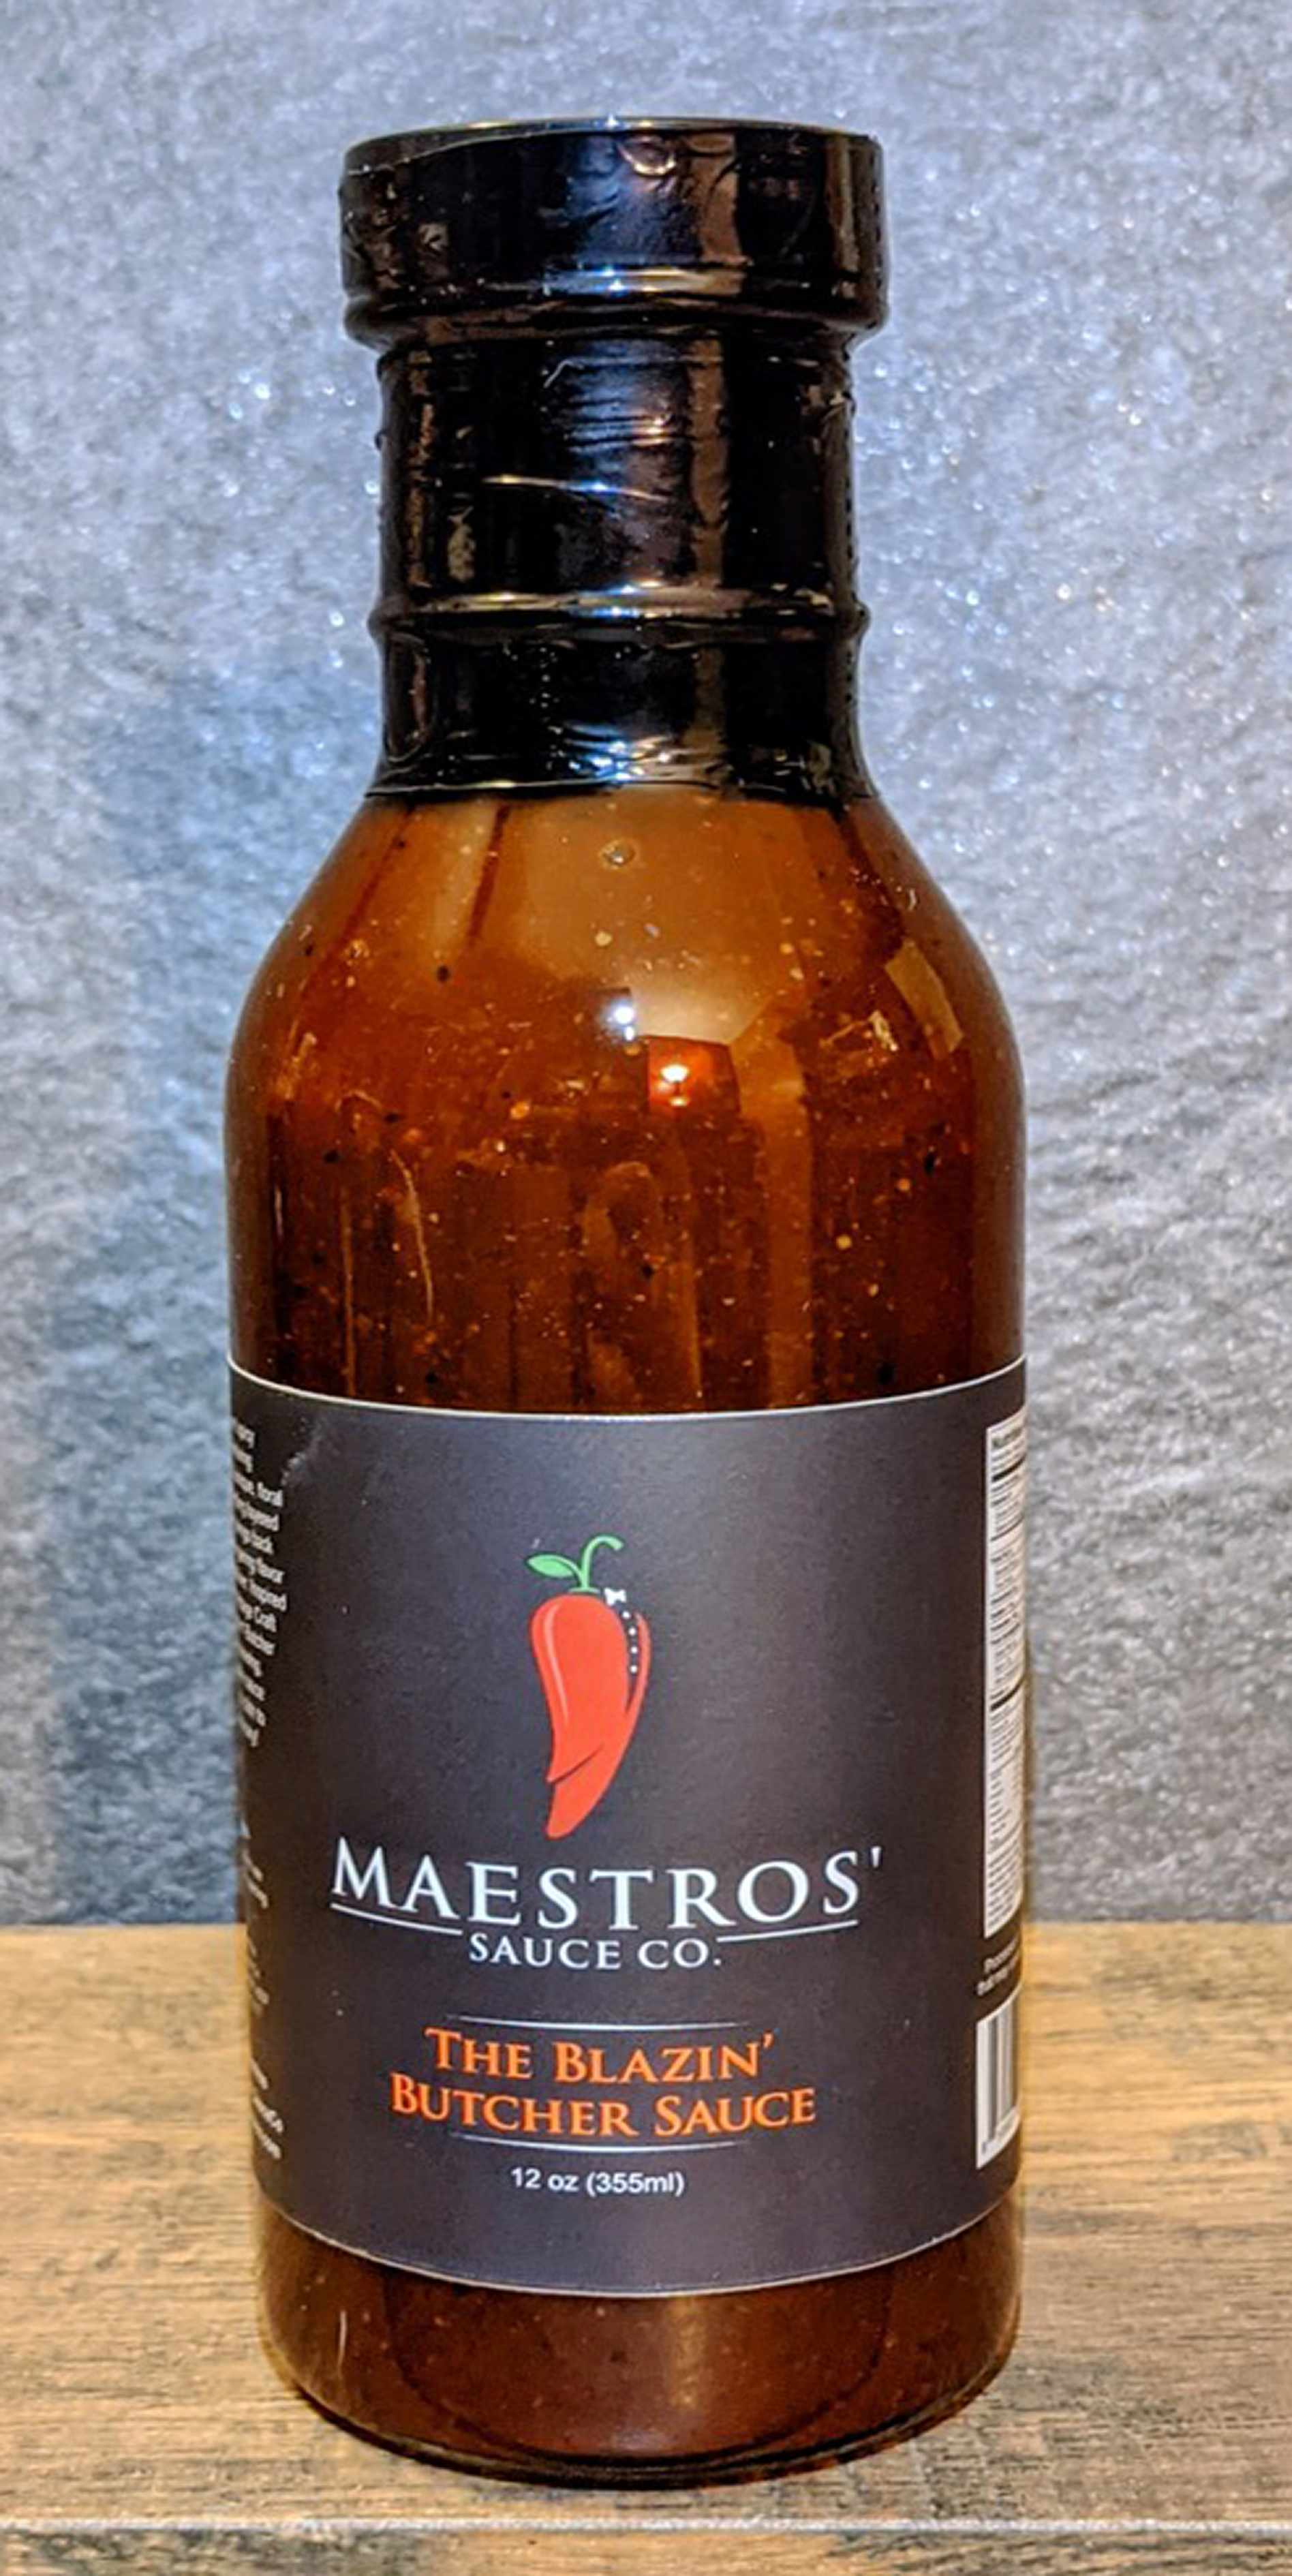 The Blazin' Butcher Sauce – Maestros' Sauce Co.